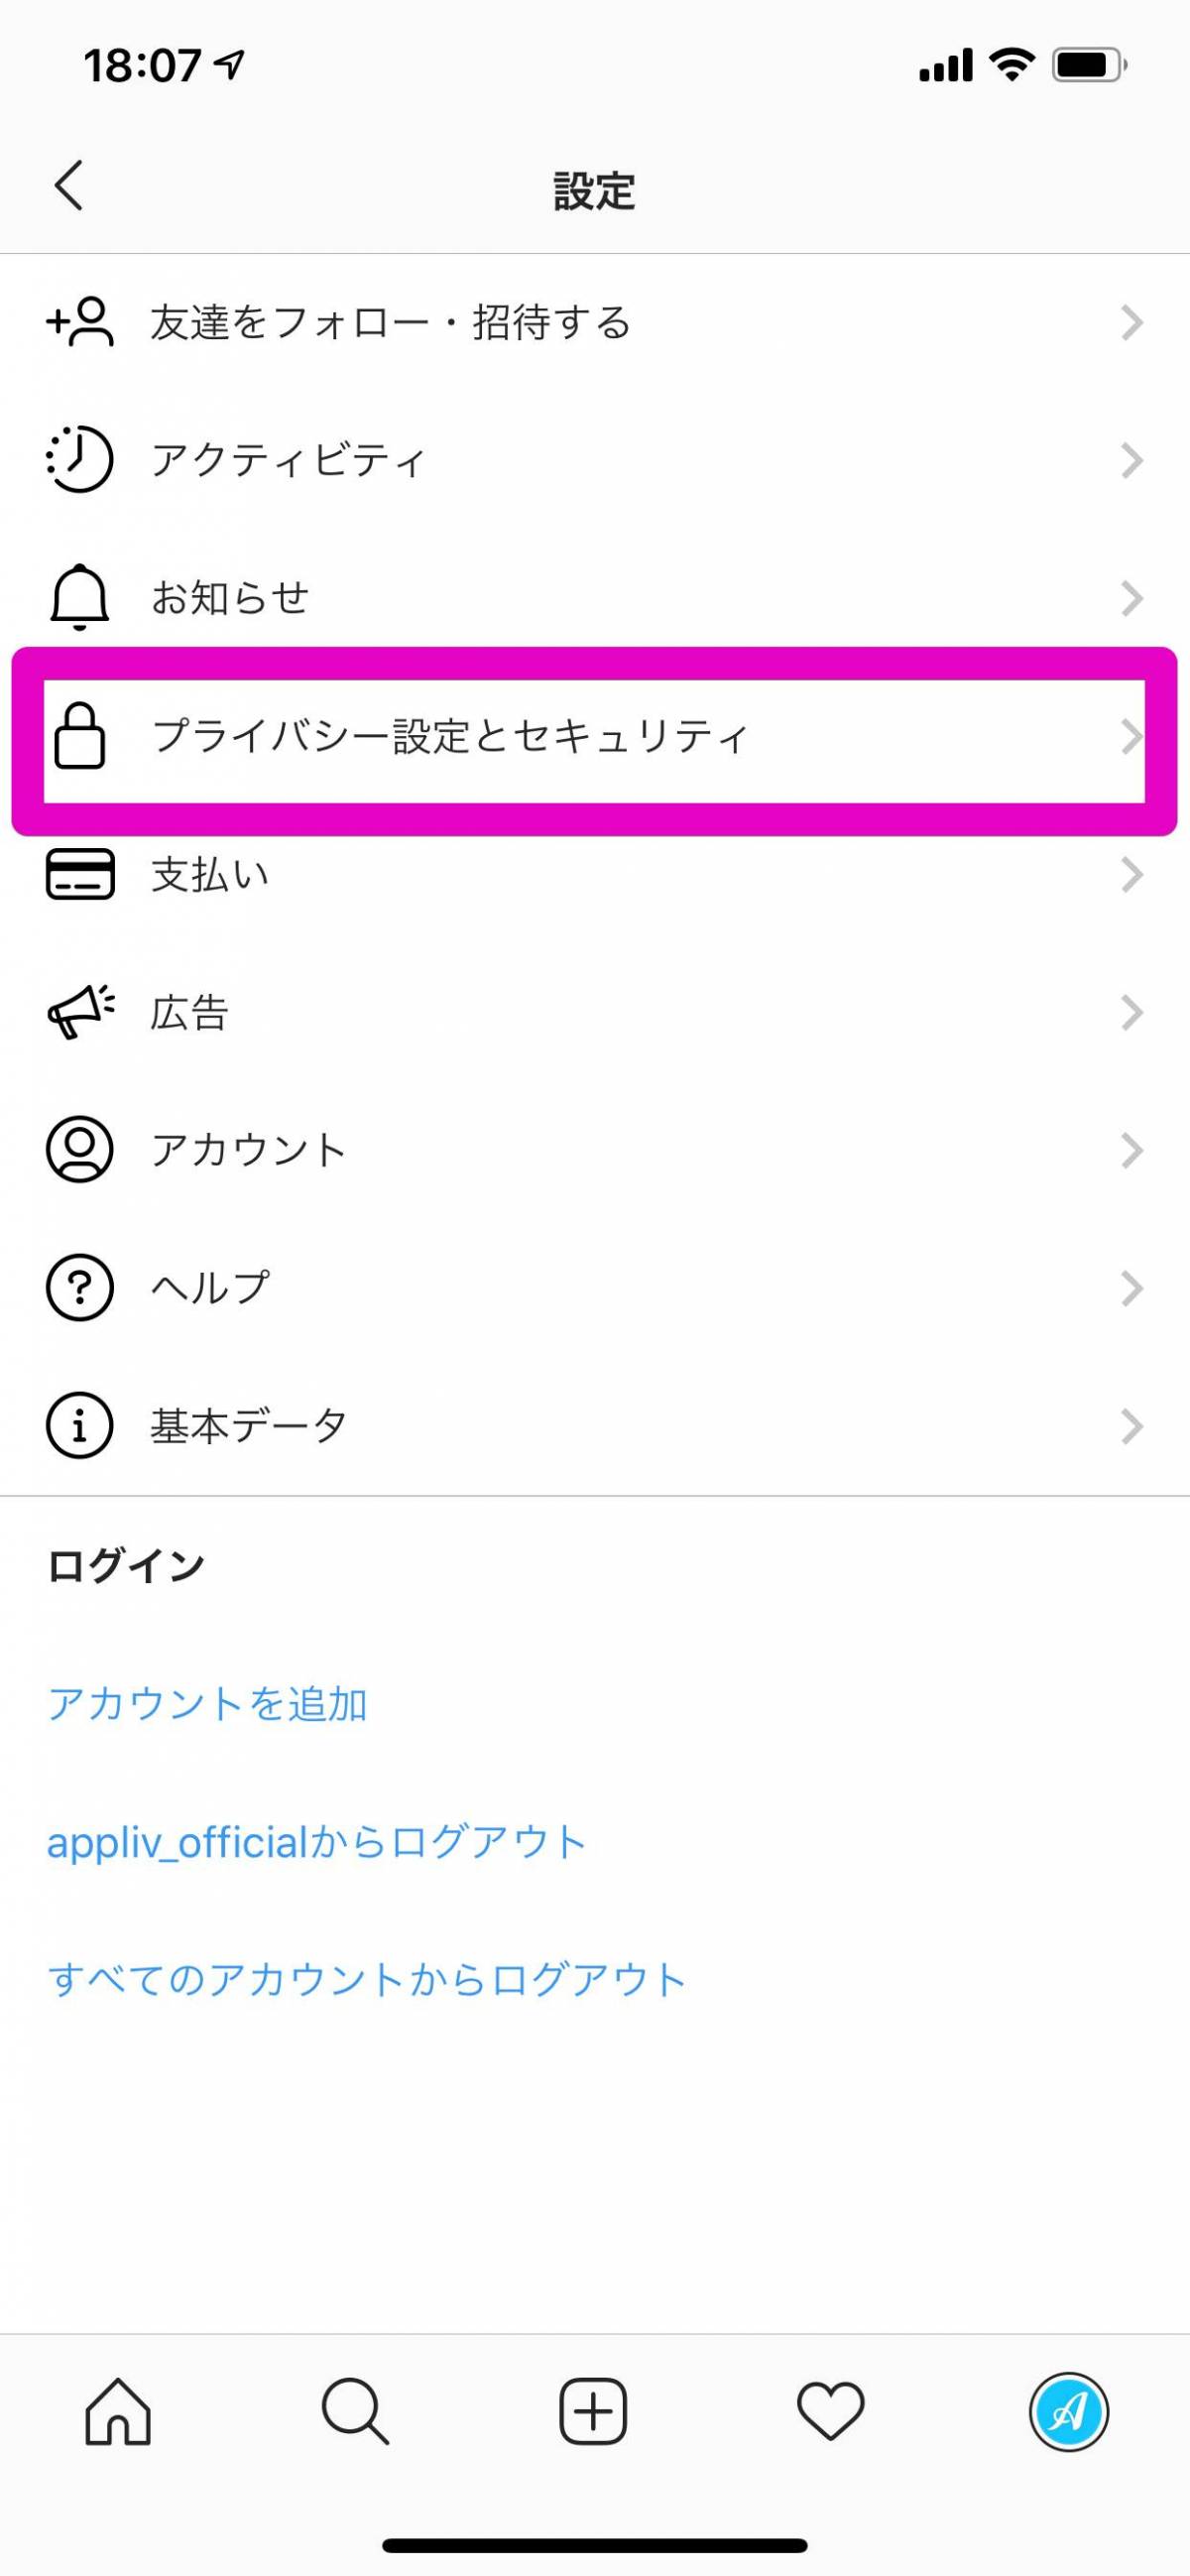 Instagram の検索履歴を削除する方法 Iphone Android Appliv Topics